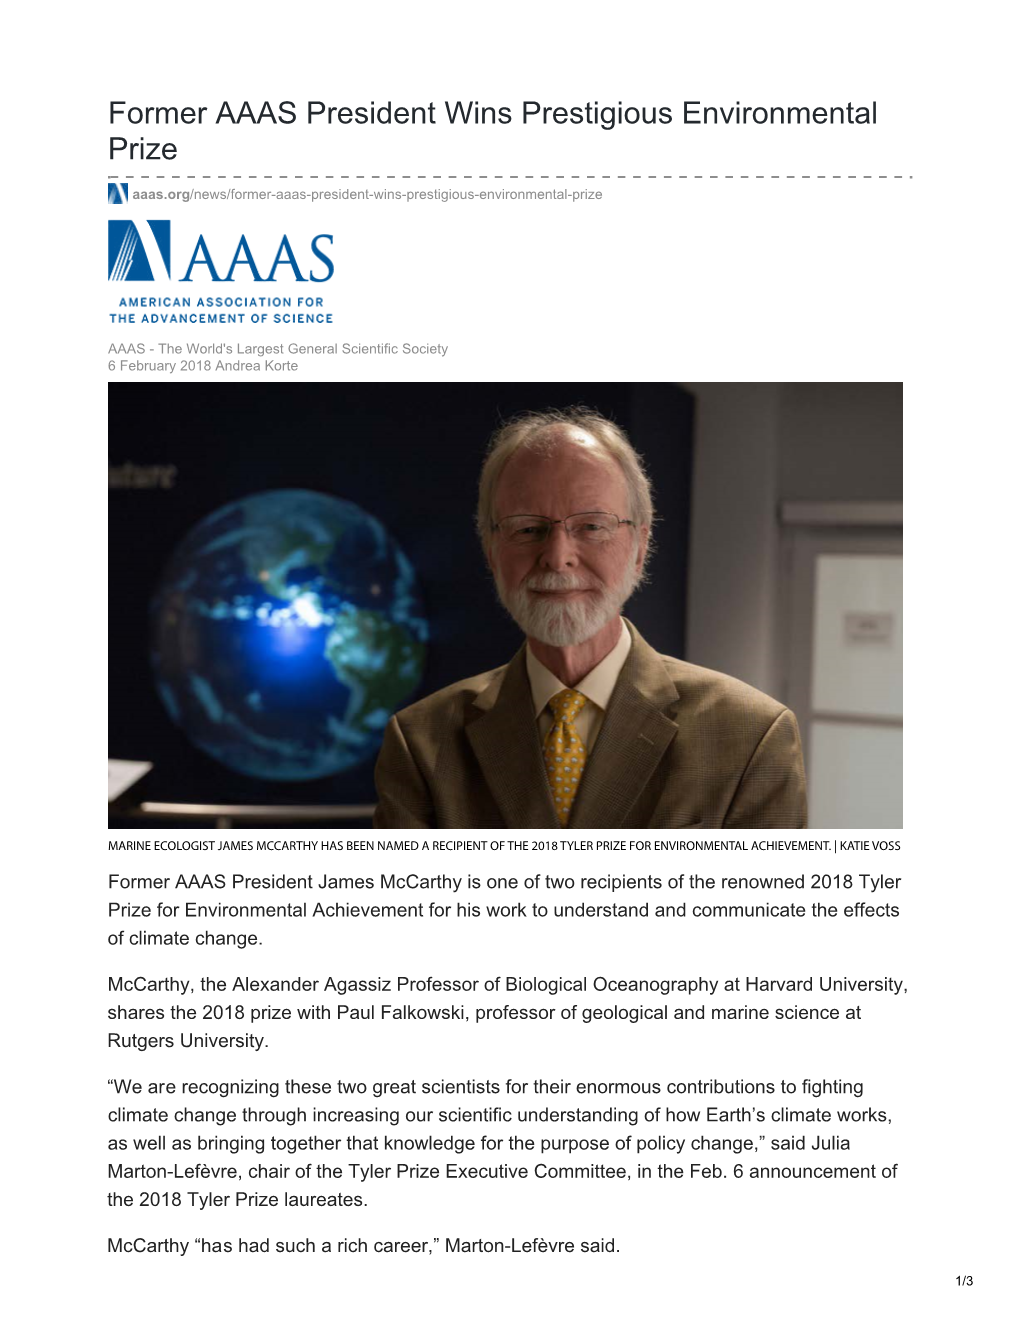 Former AAAS President Wins Prestigious Environmental Prize